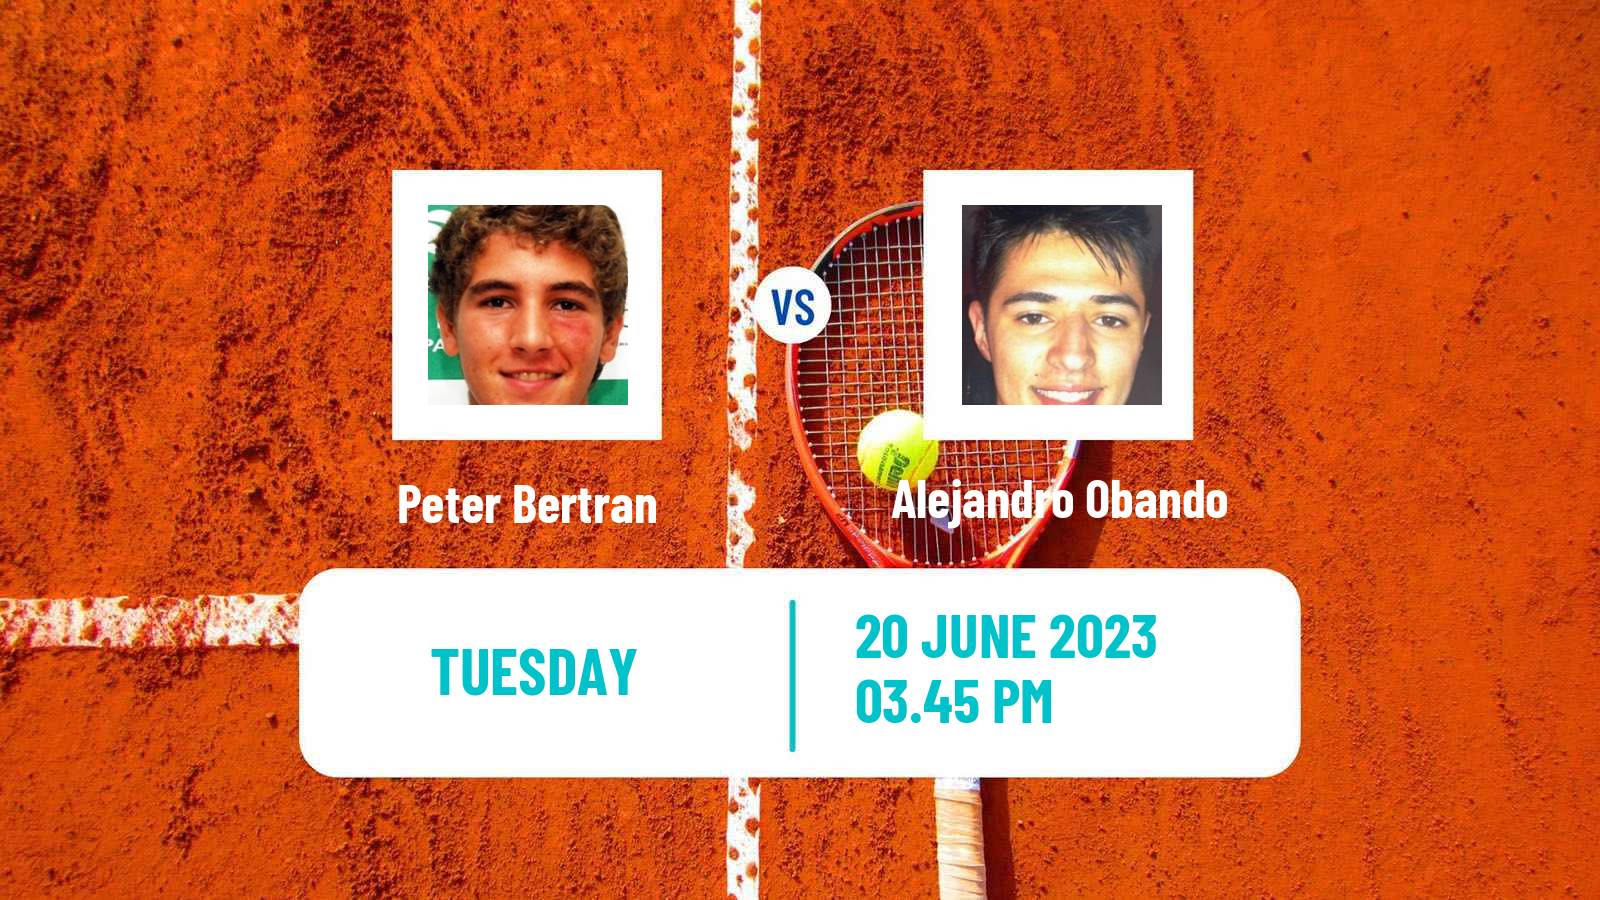 Tennis Davis Cup Group III Peter Bertran - Alejandro Obando